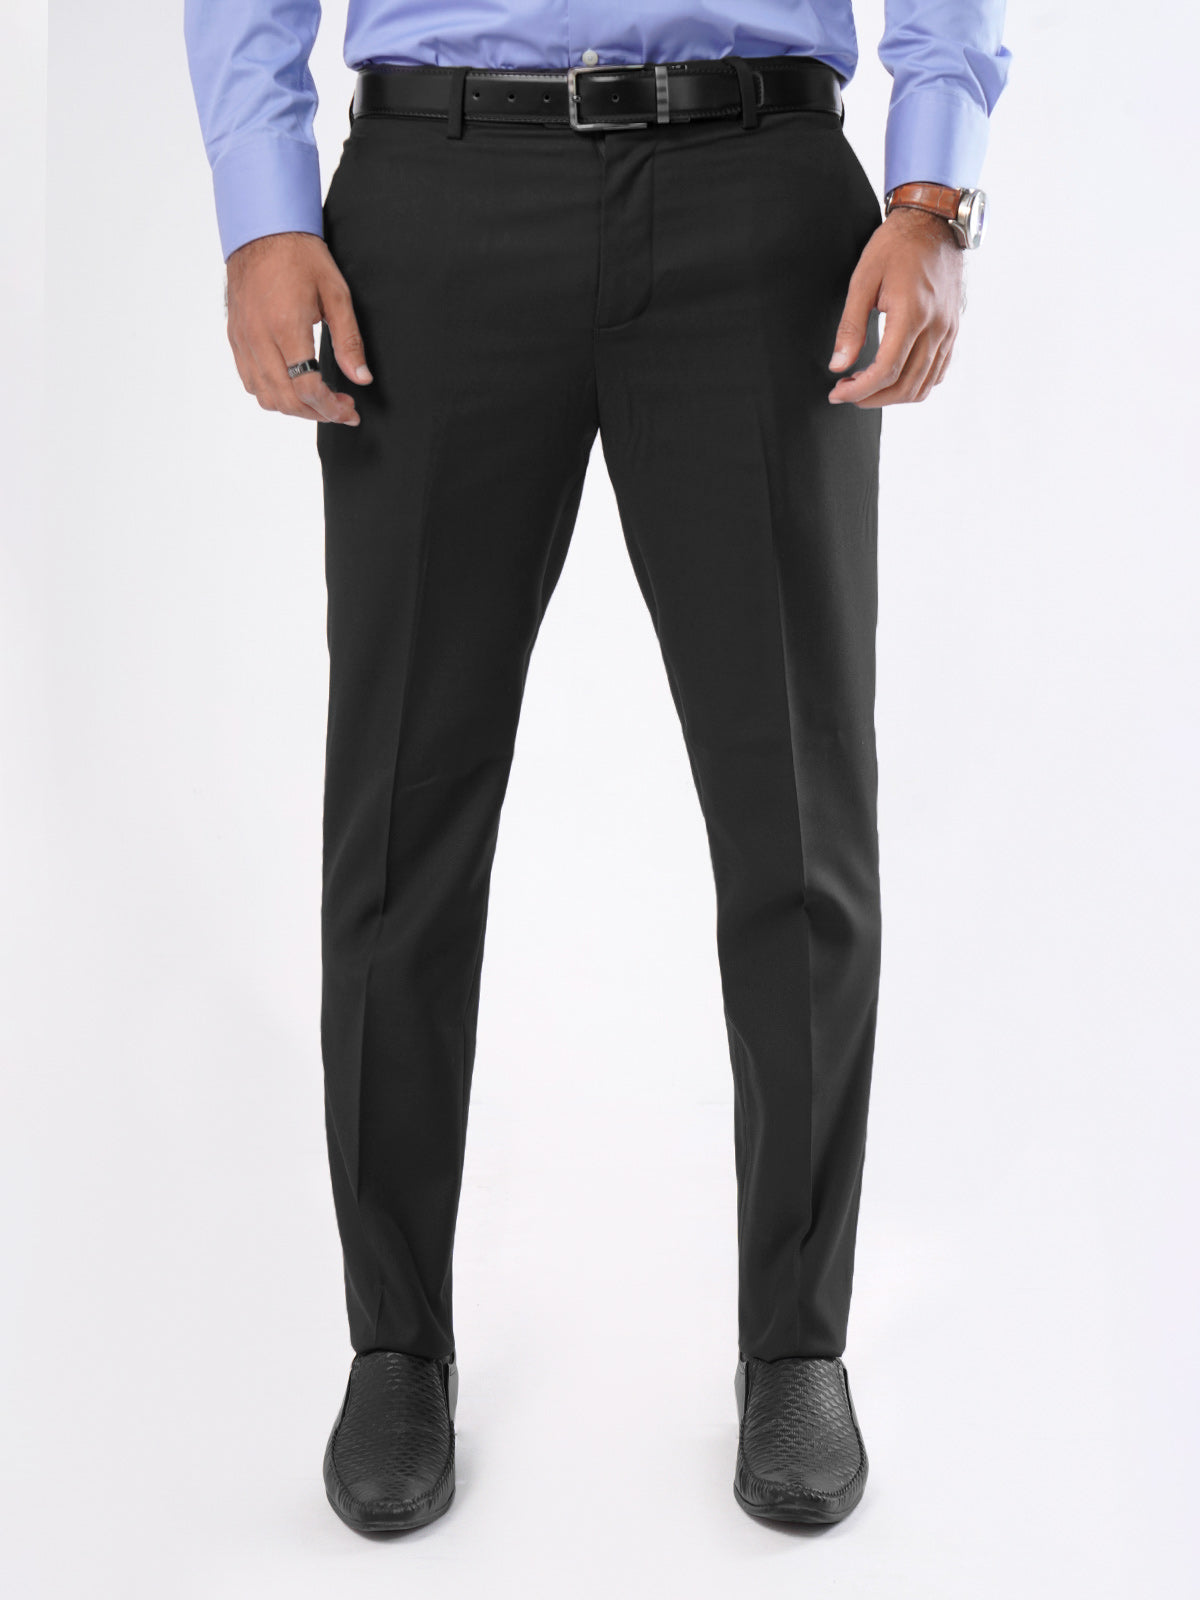 Black Plain Executive Formal Dress Trouser (FDT-103)